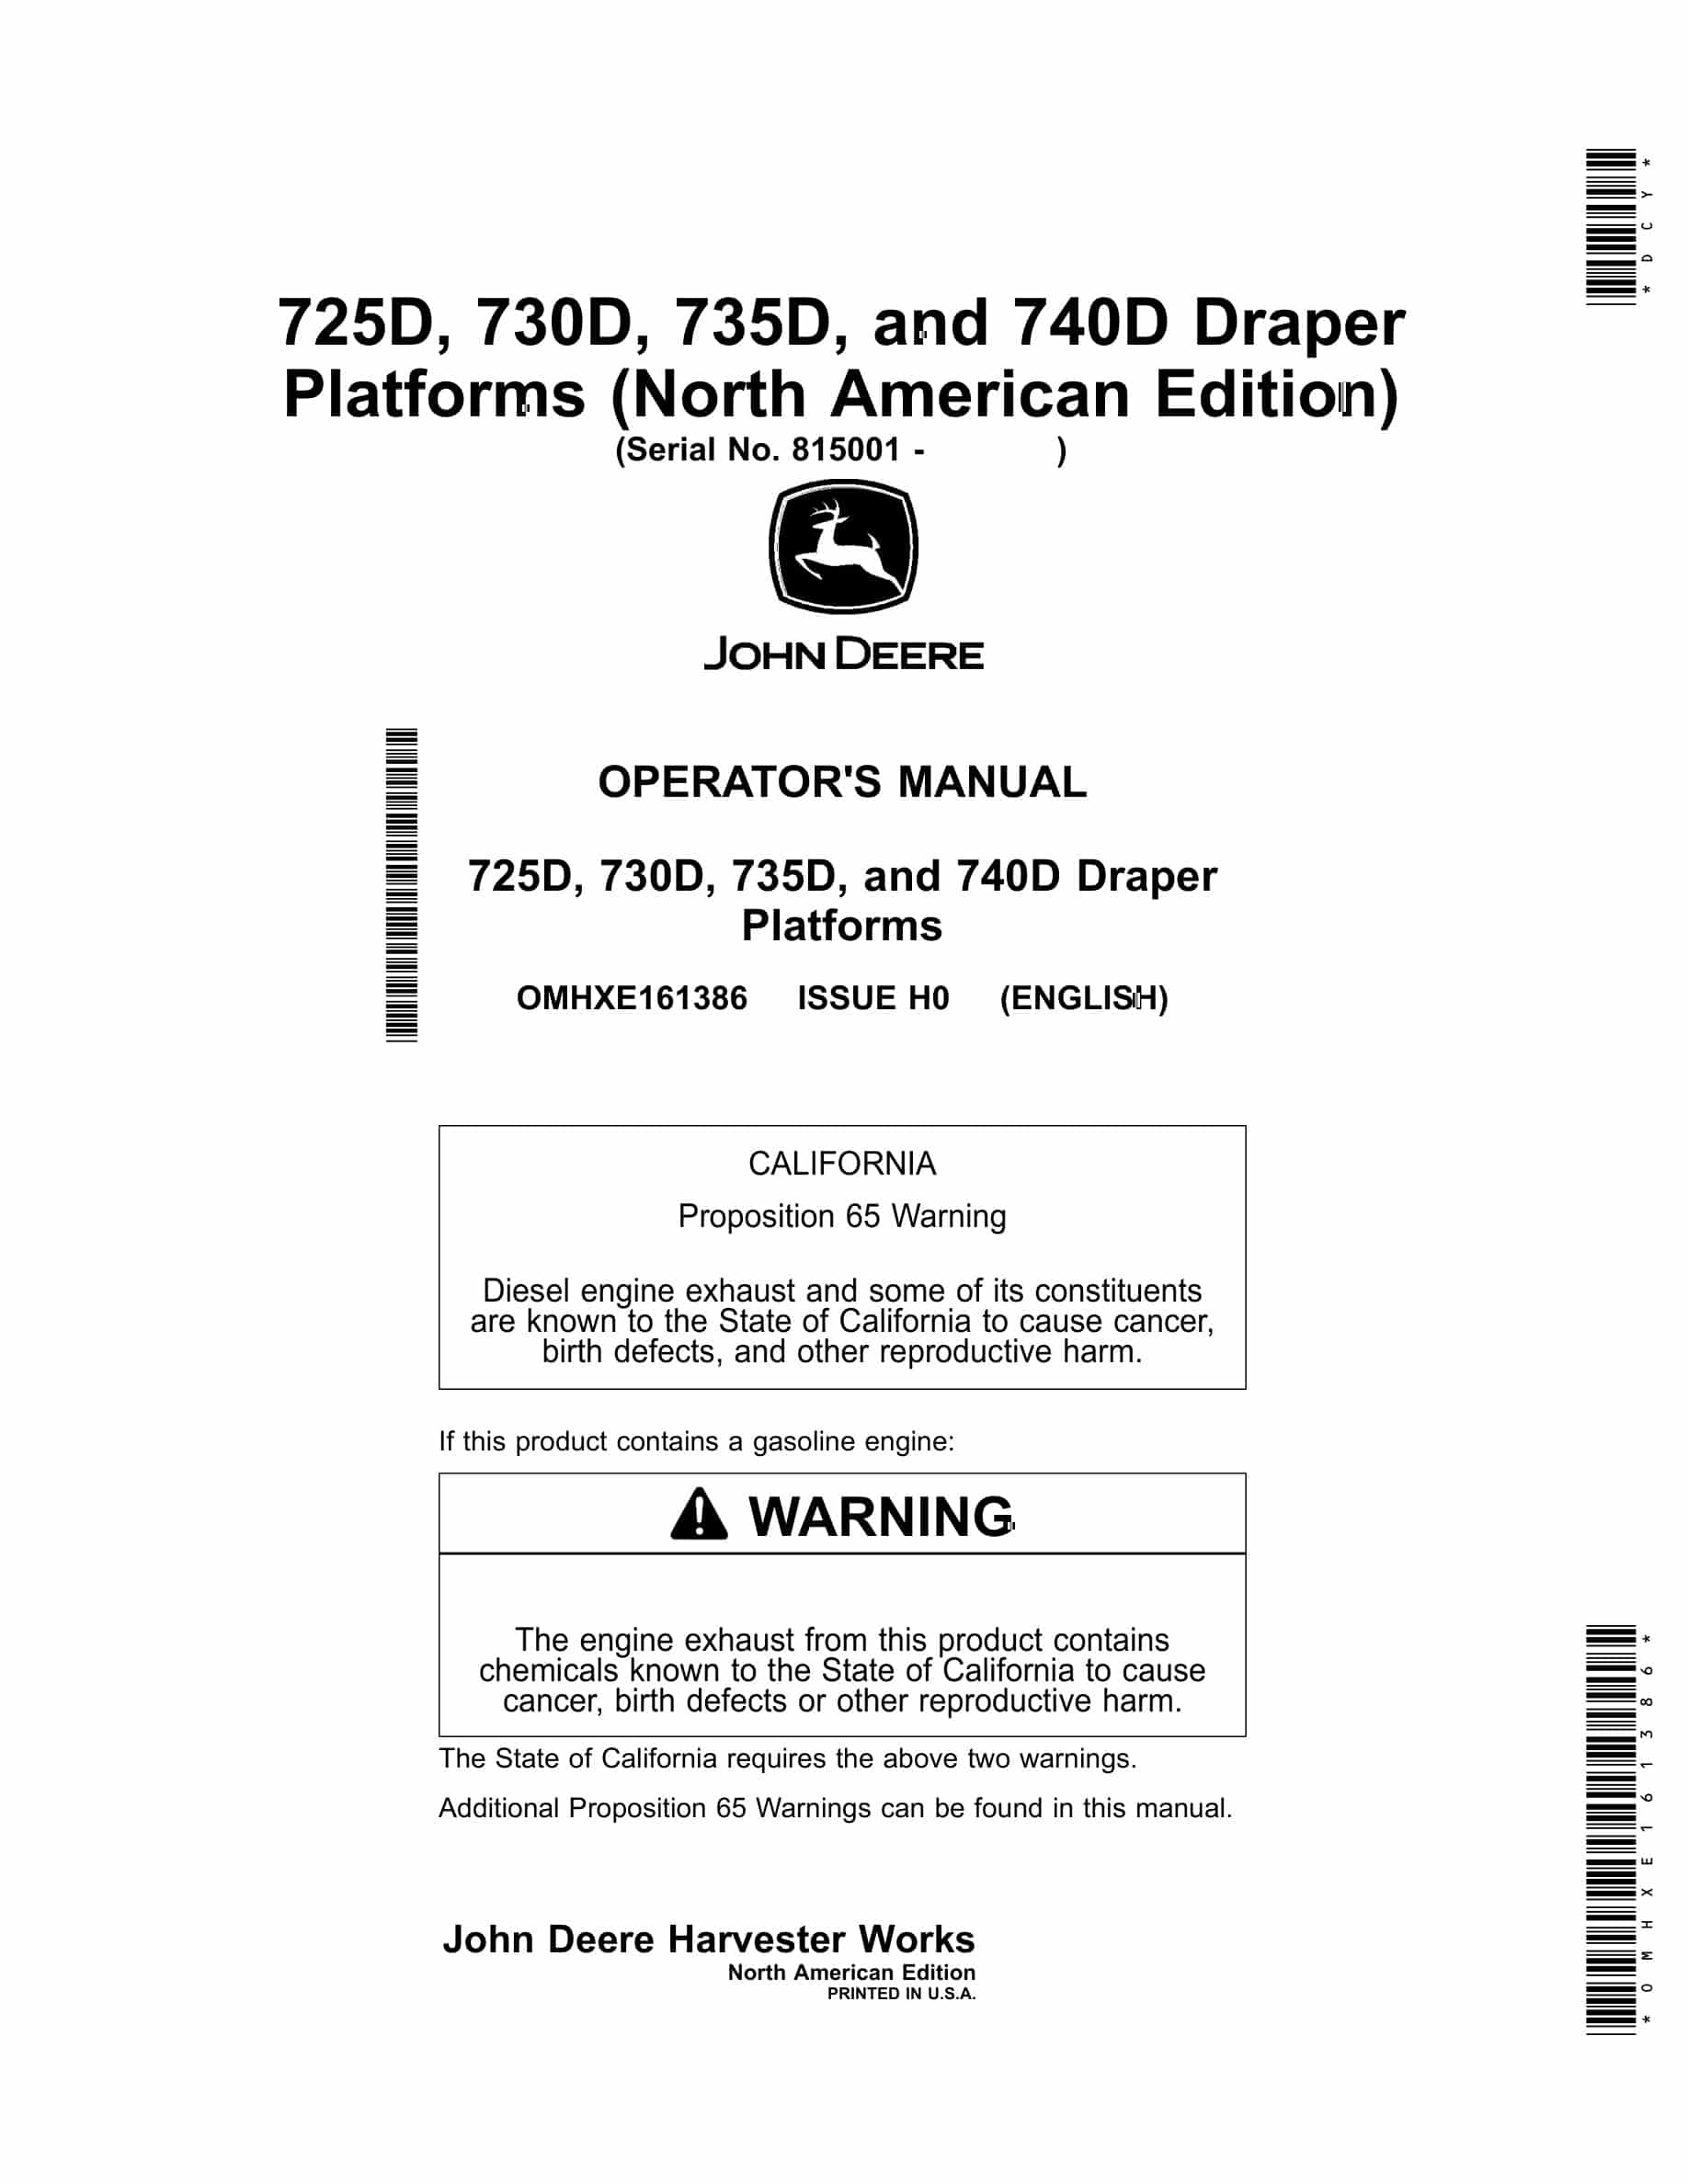 John Deere 725D, 730D, 735D, and 740D Draper Platforms Operator Manual OMHXE161386-1